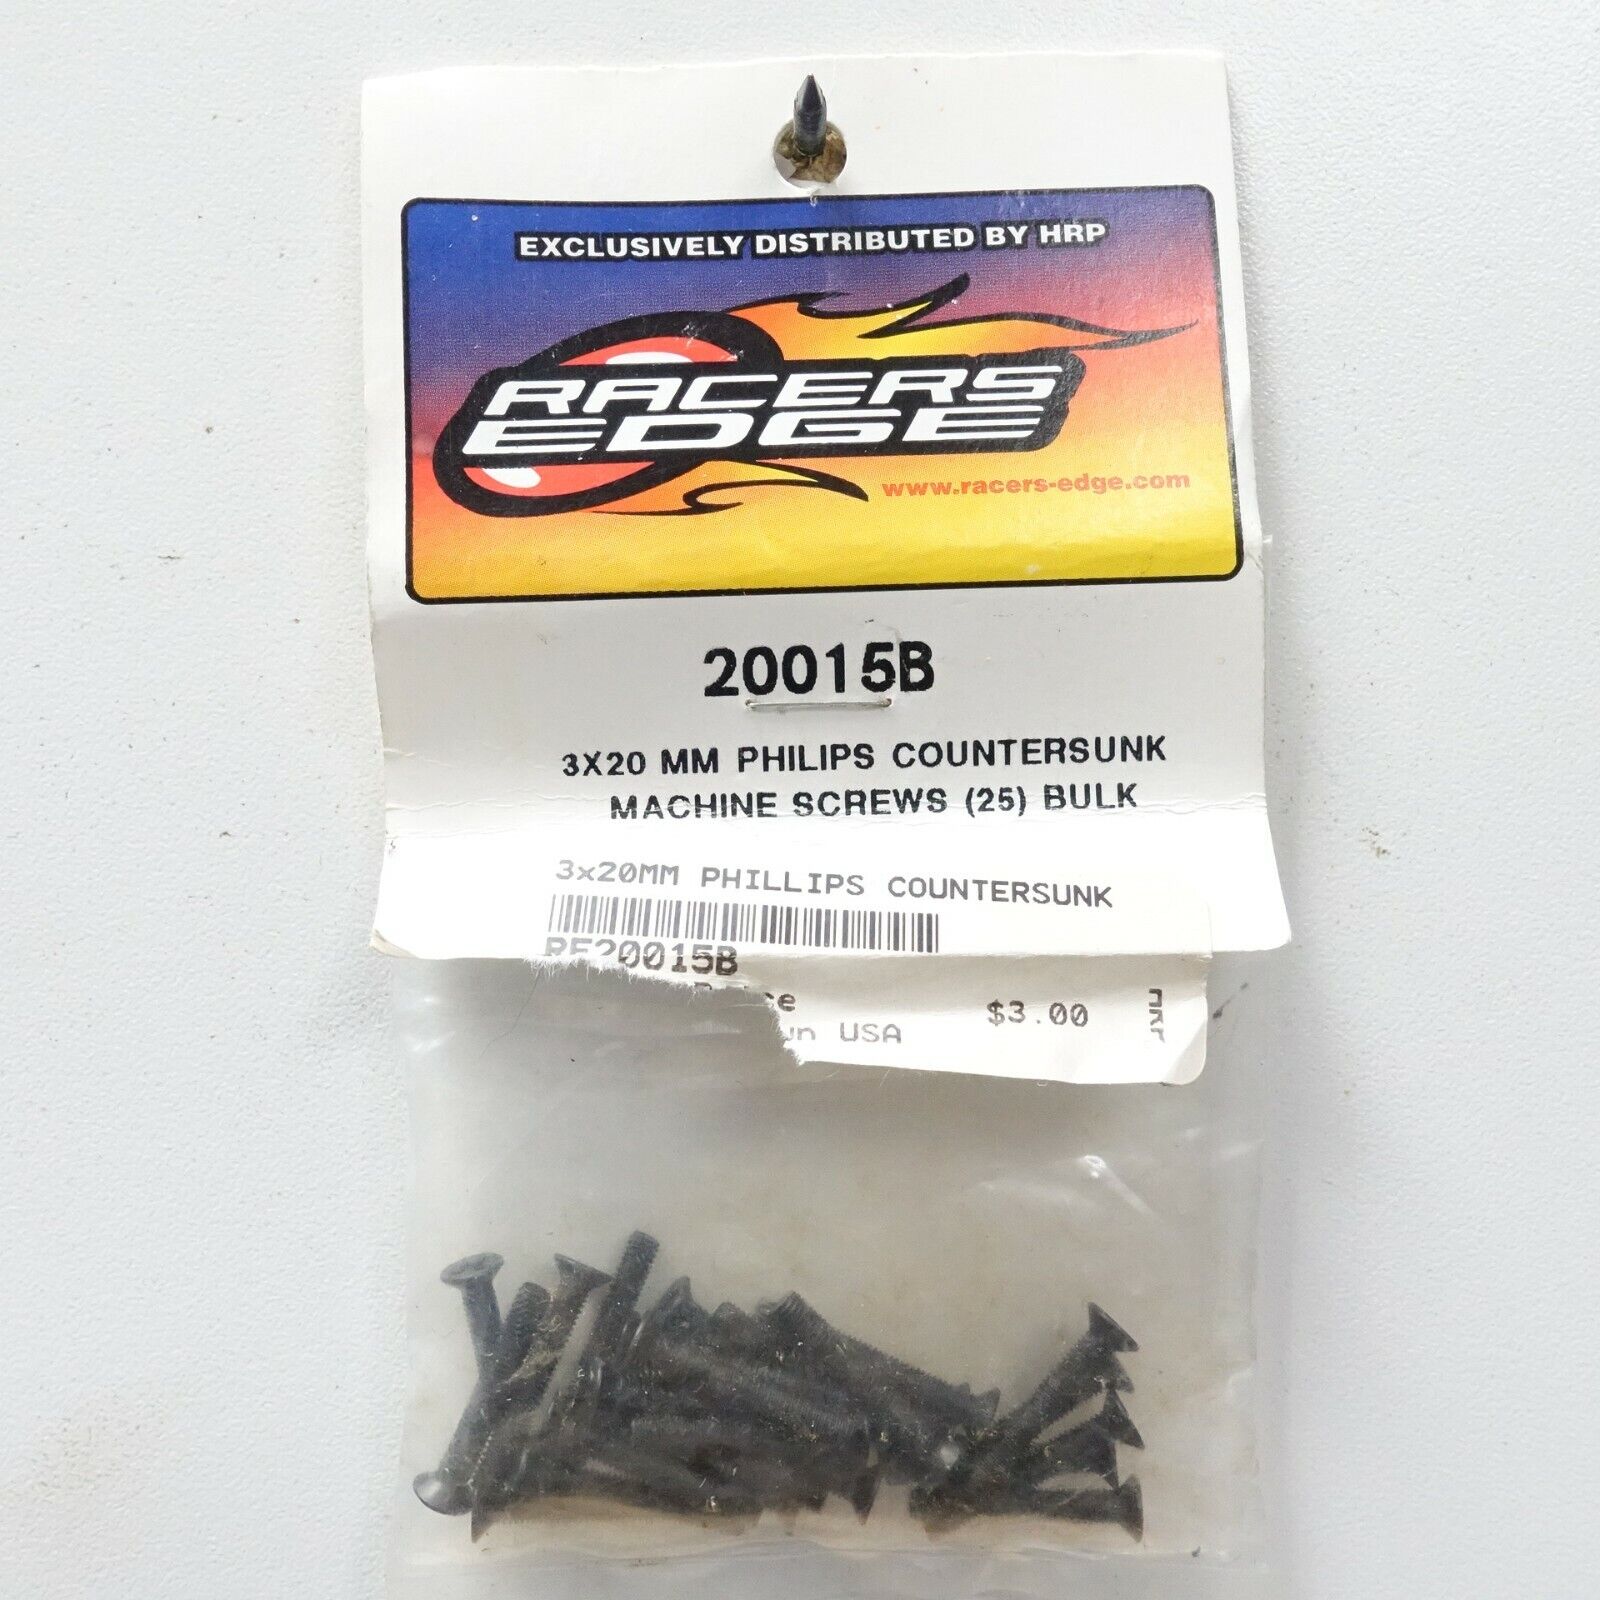 Racers Edge 20015B 3x20MM Philips Countersunk Machine Screws (25) Bulk